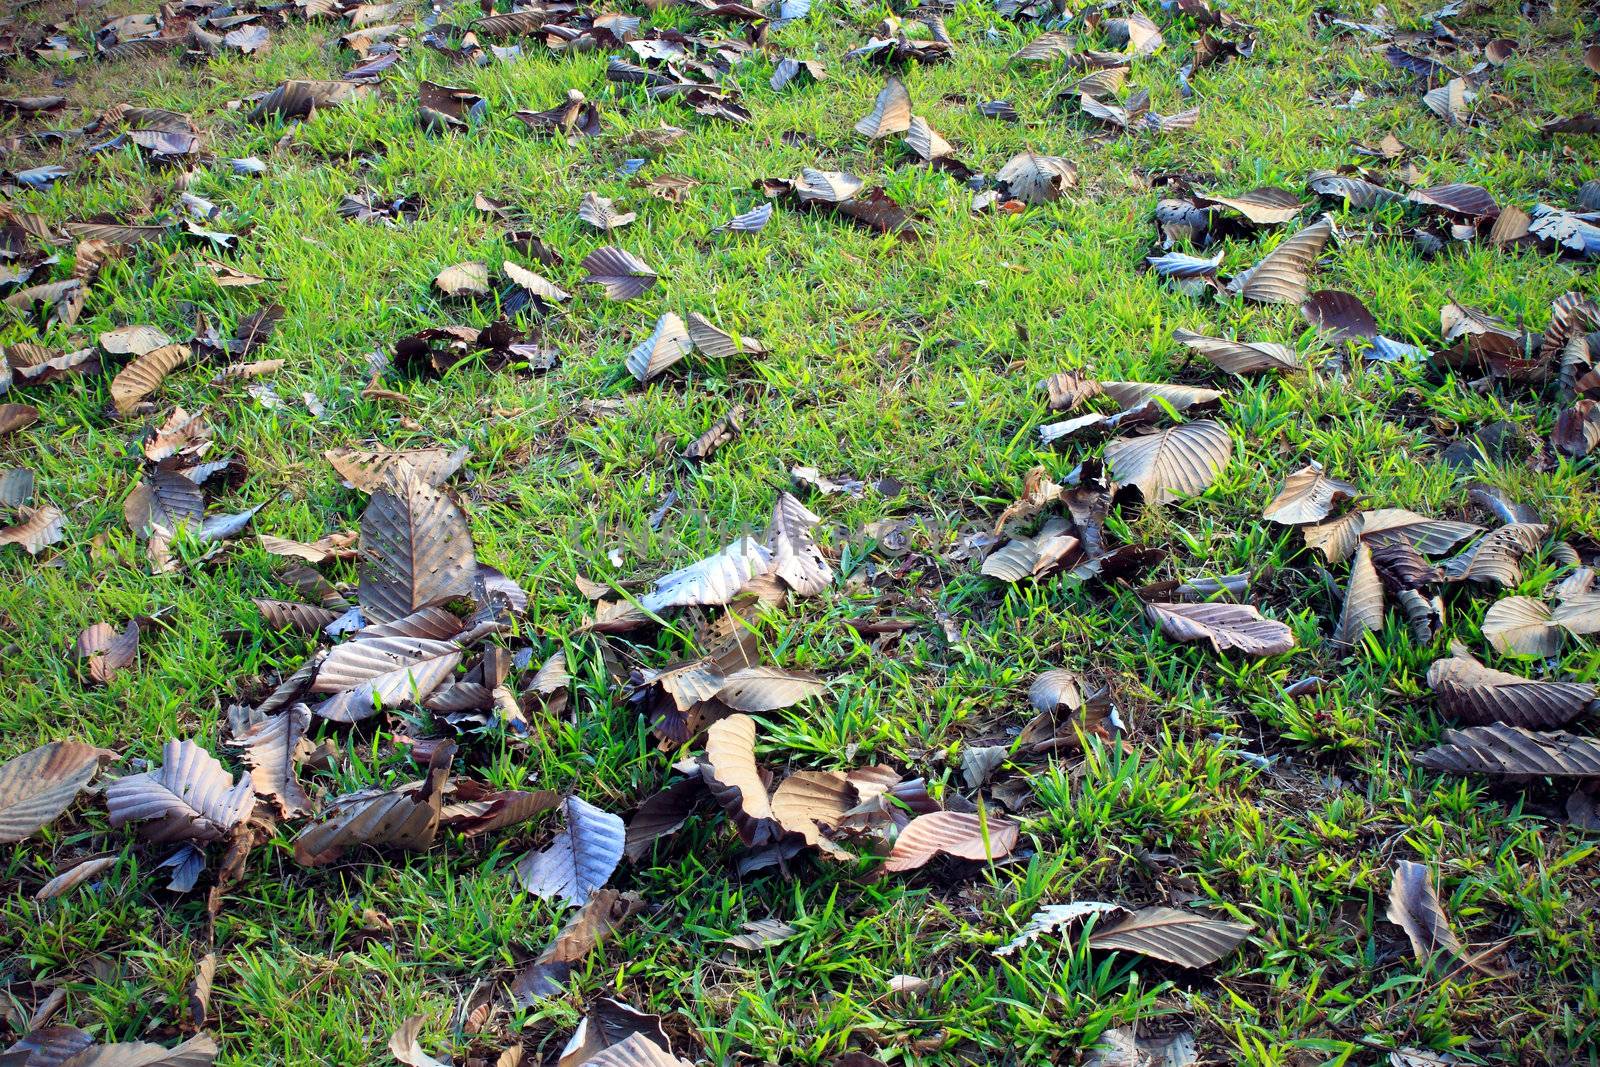 Autumn leafs in the green grass landscape fragment background by geargodz